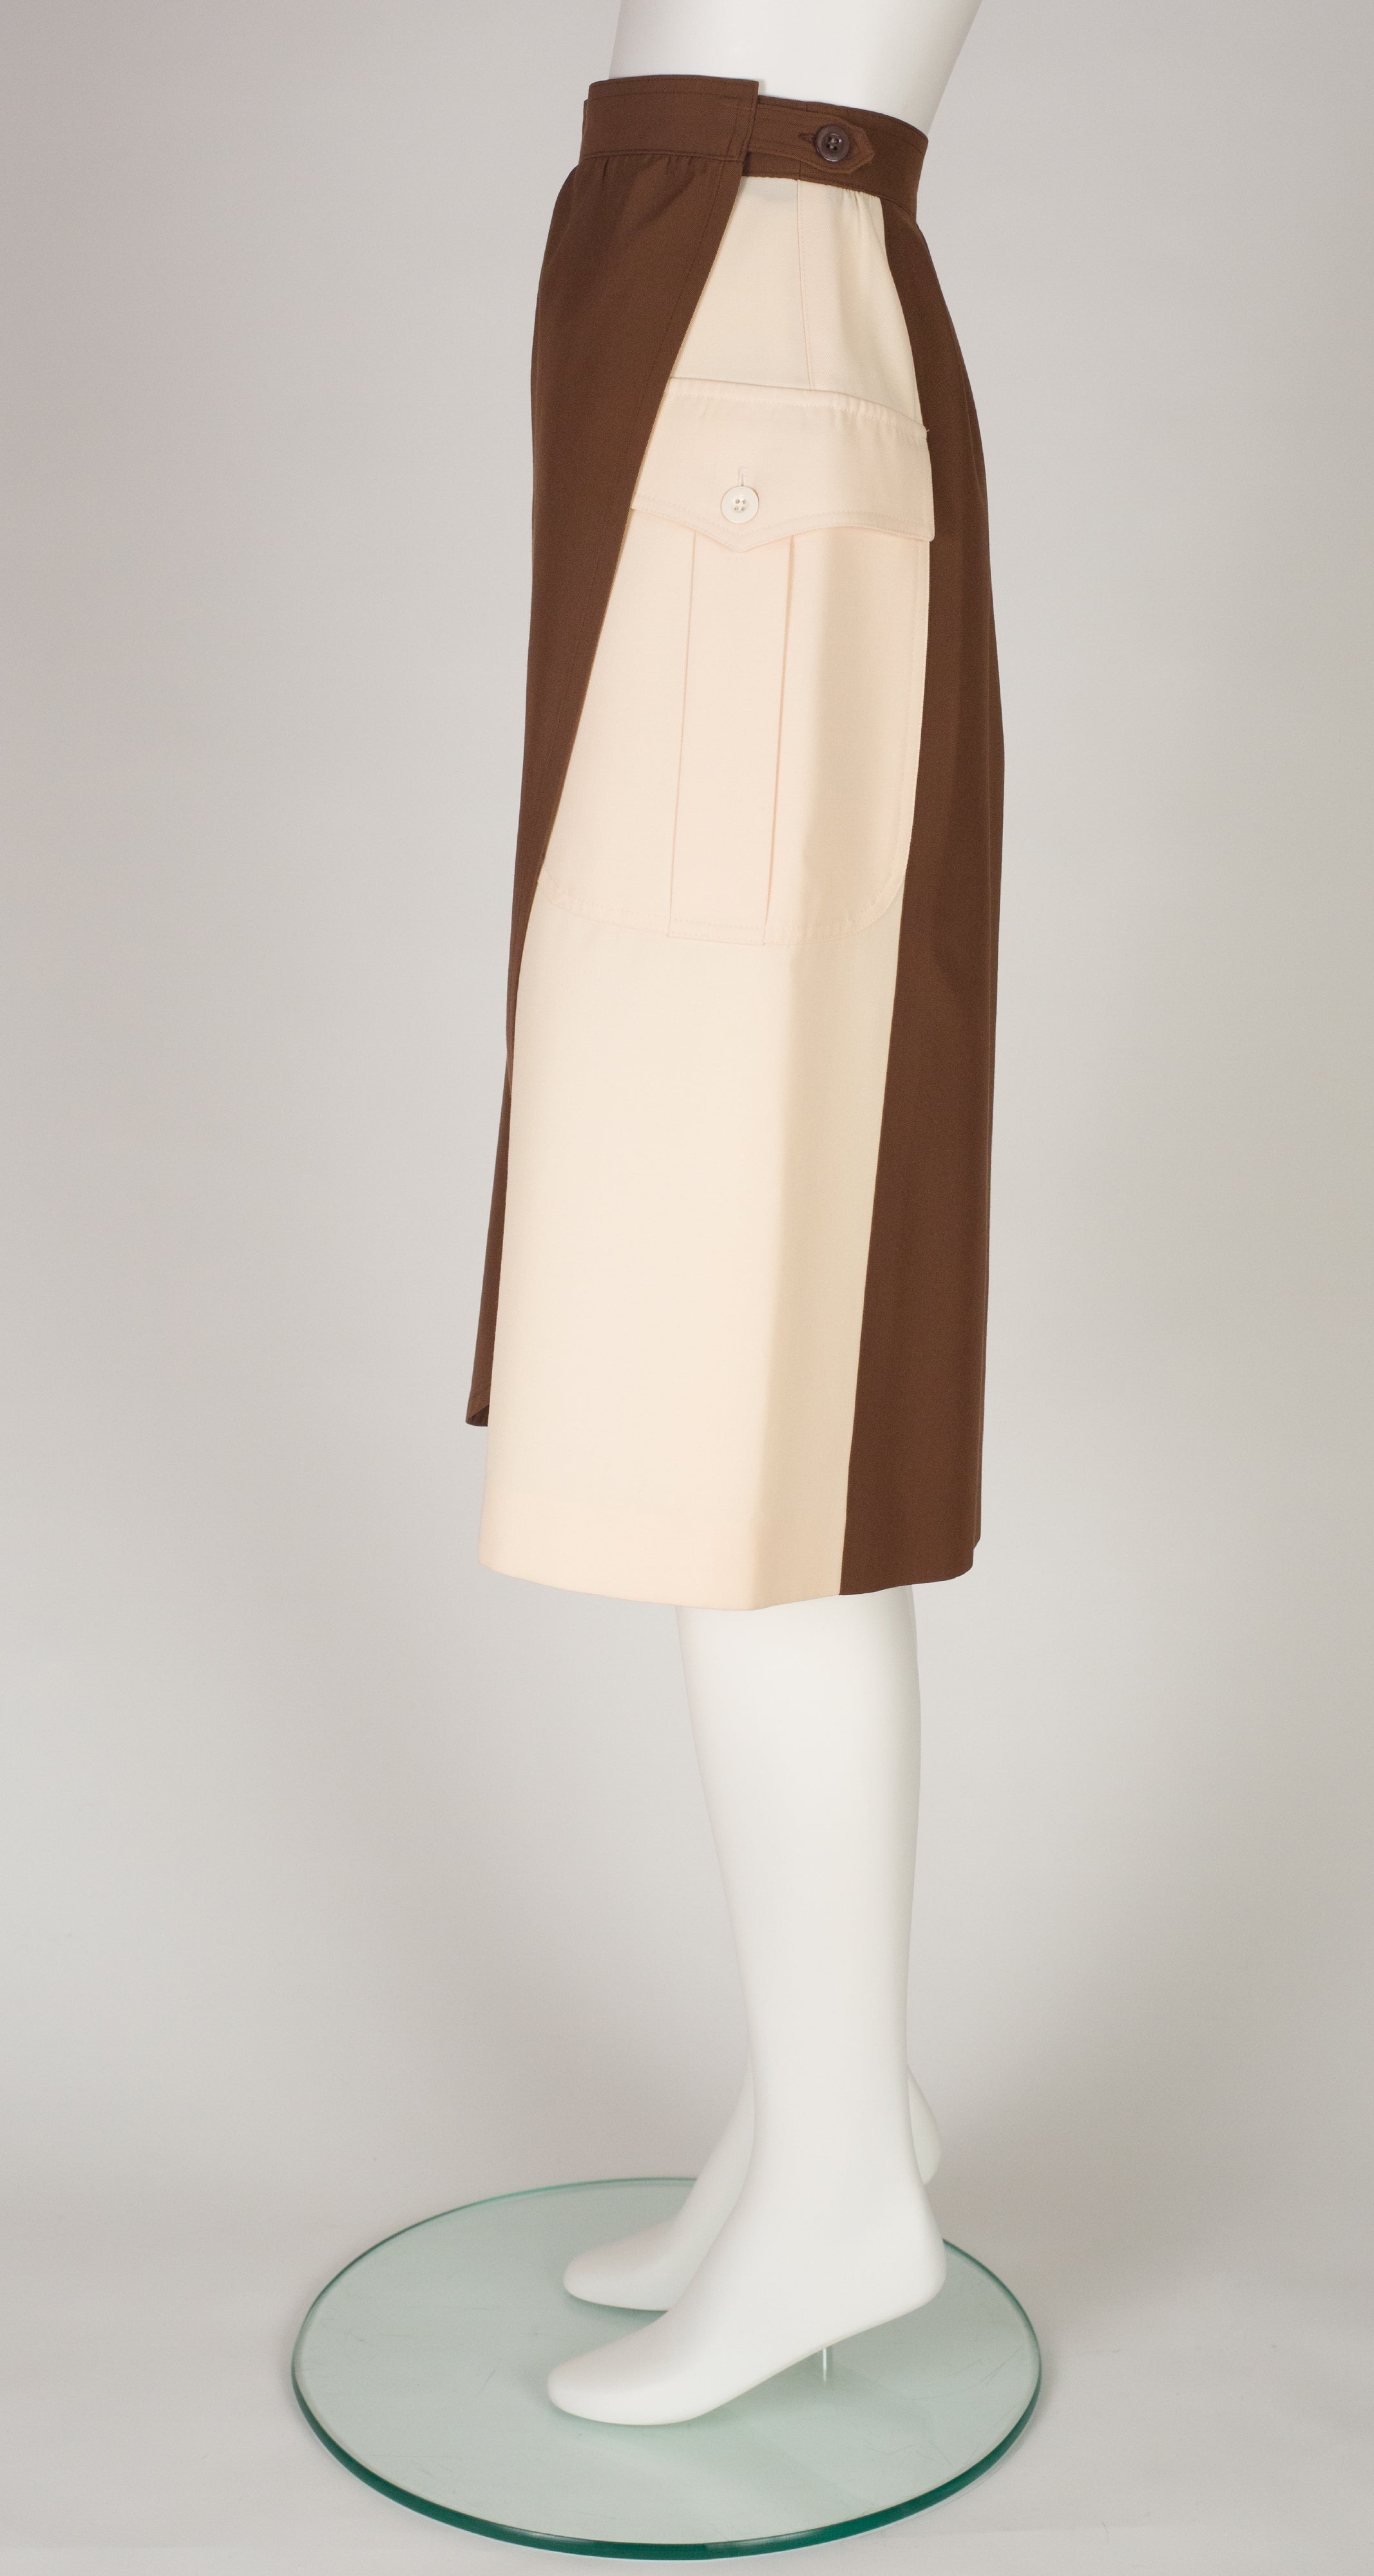 1980s Brown & Cream Color Block Wool Wrap Skirt